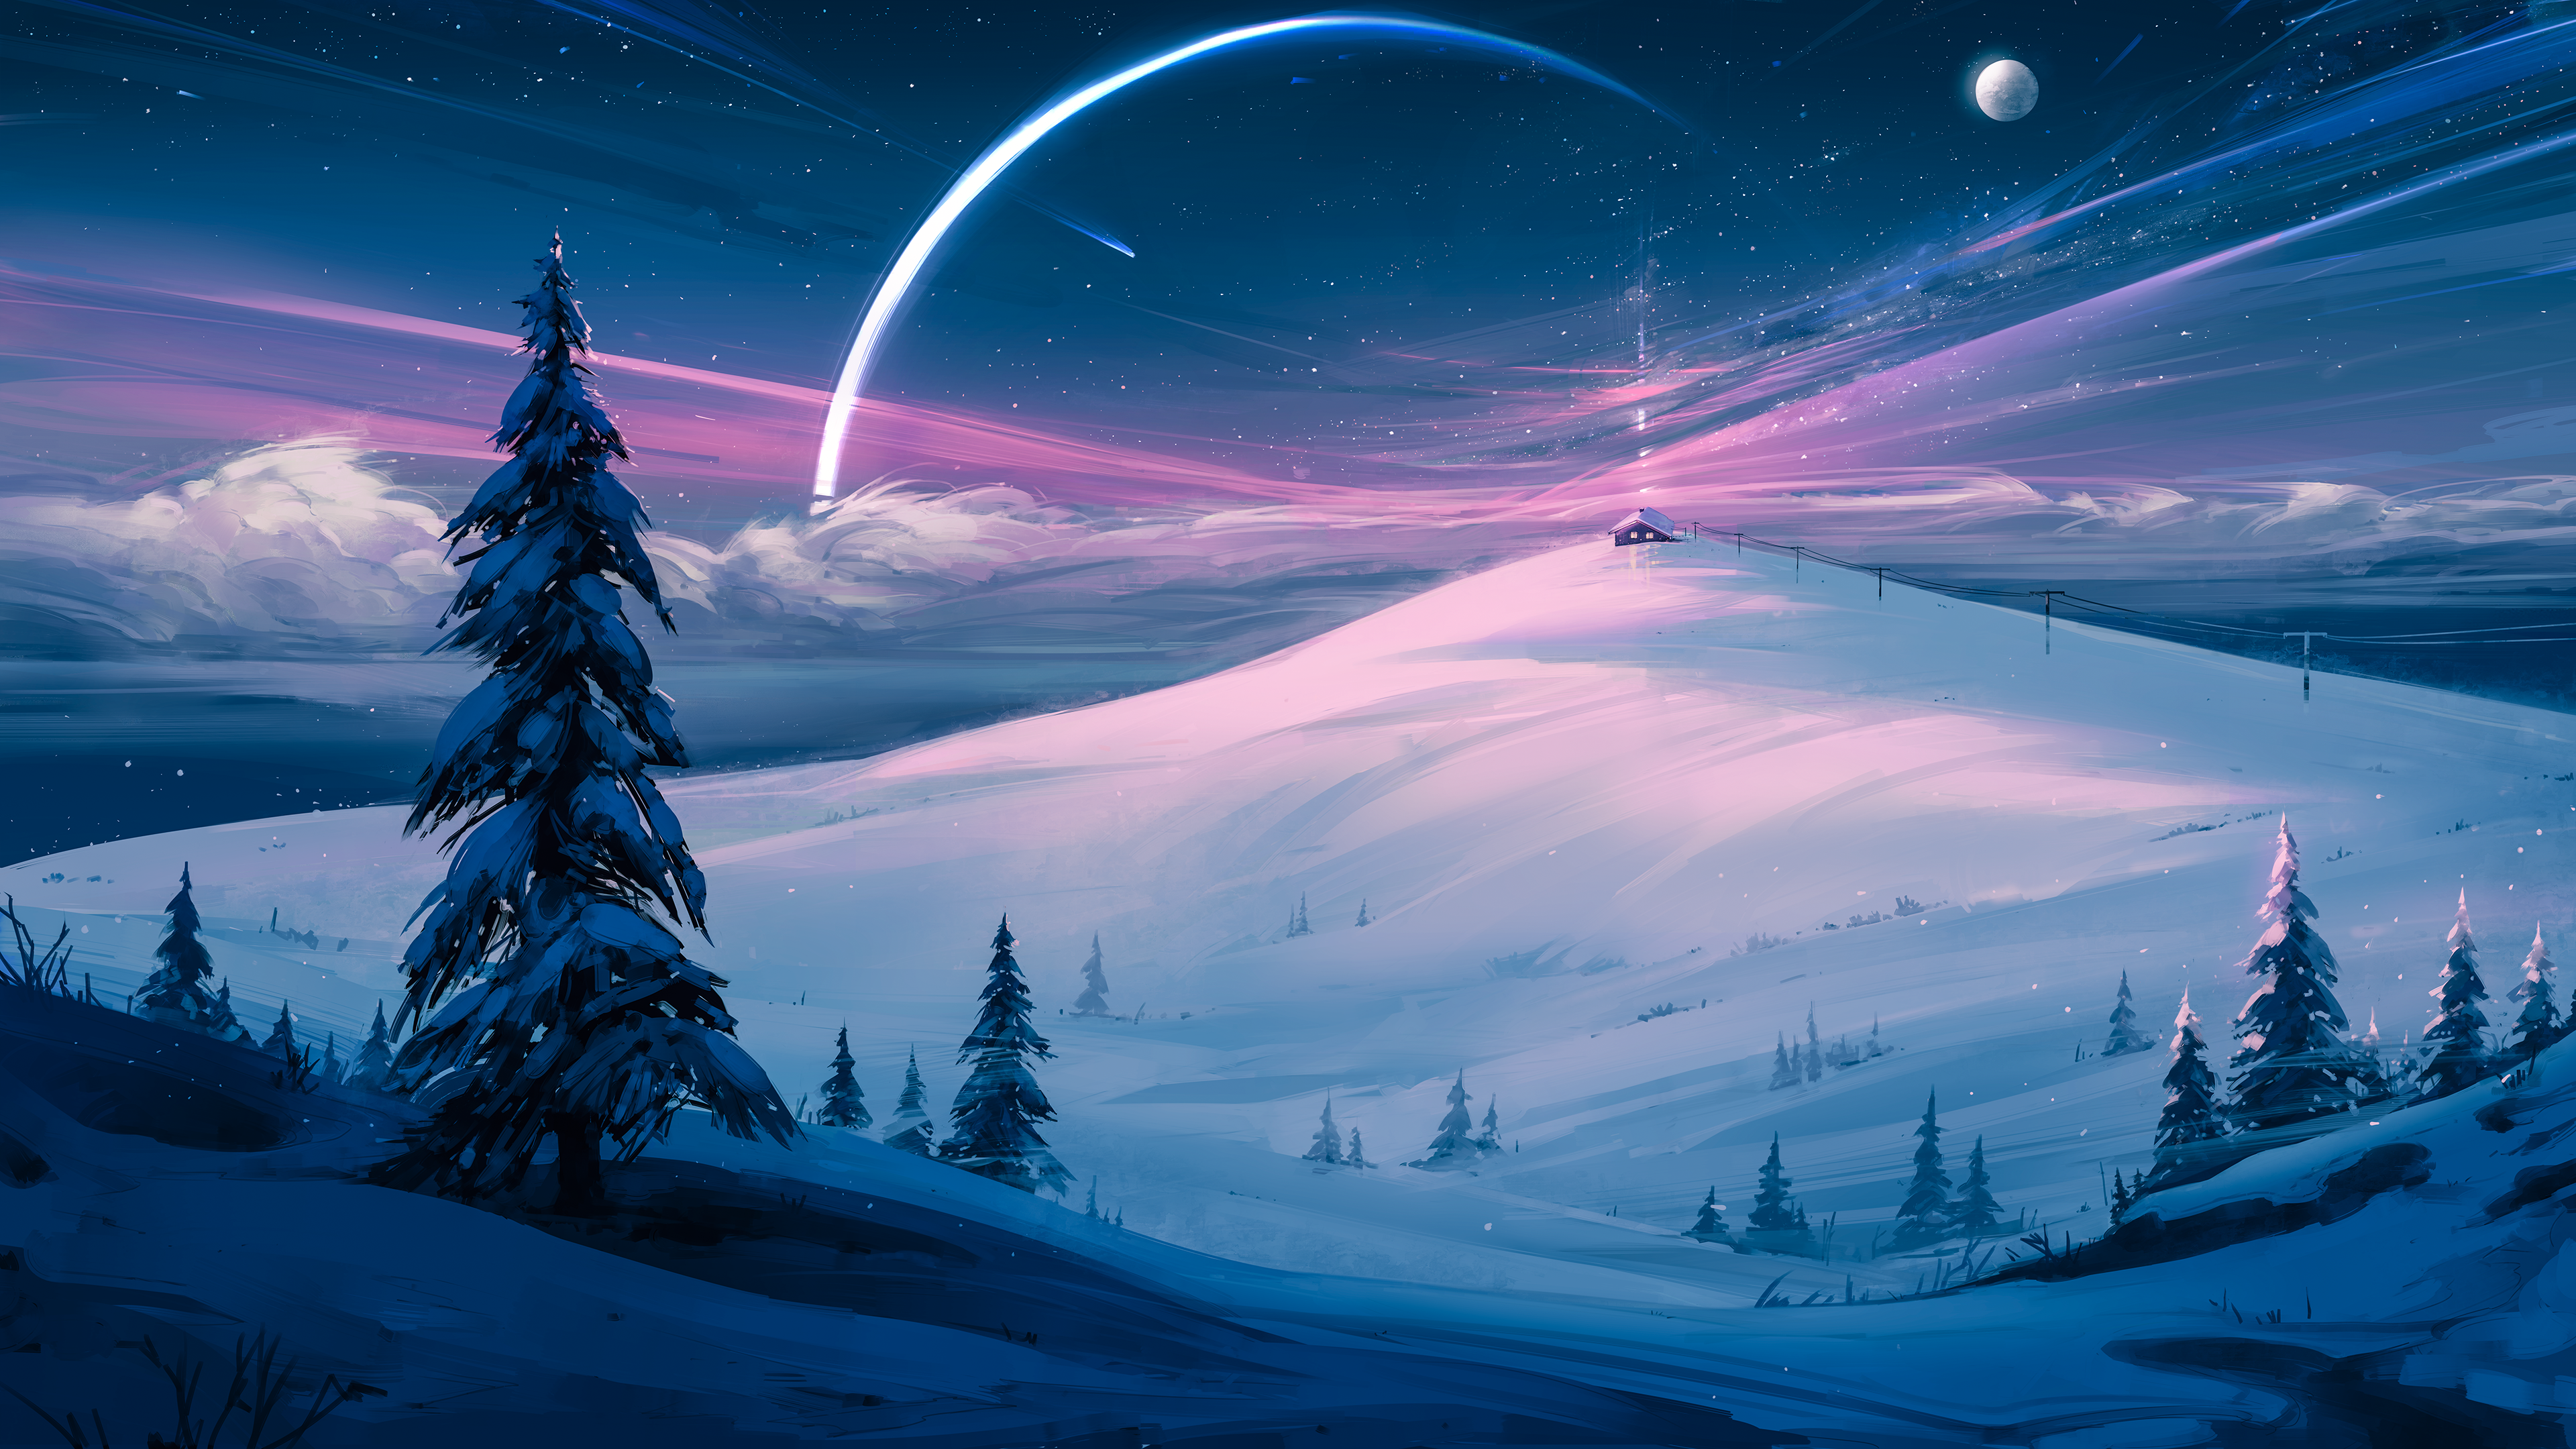 General 3840x2160 Aenami digital art artwork landscape snow winter 4K nature mountains clouds trees stars starry night sky Moon